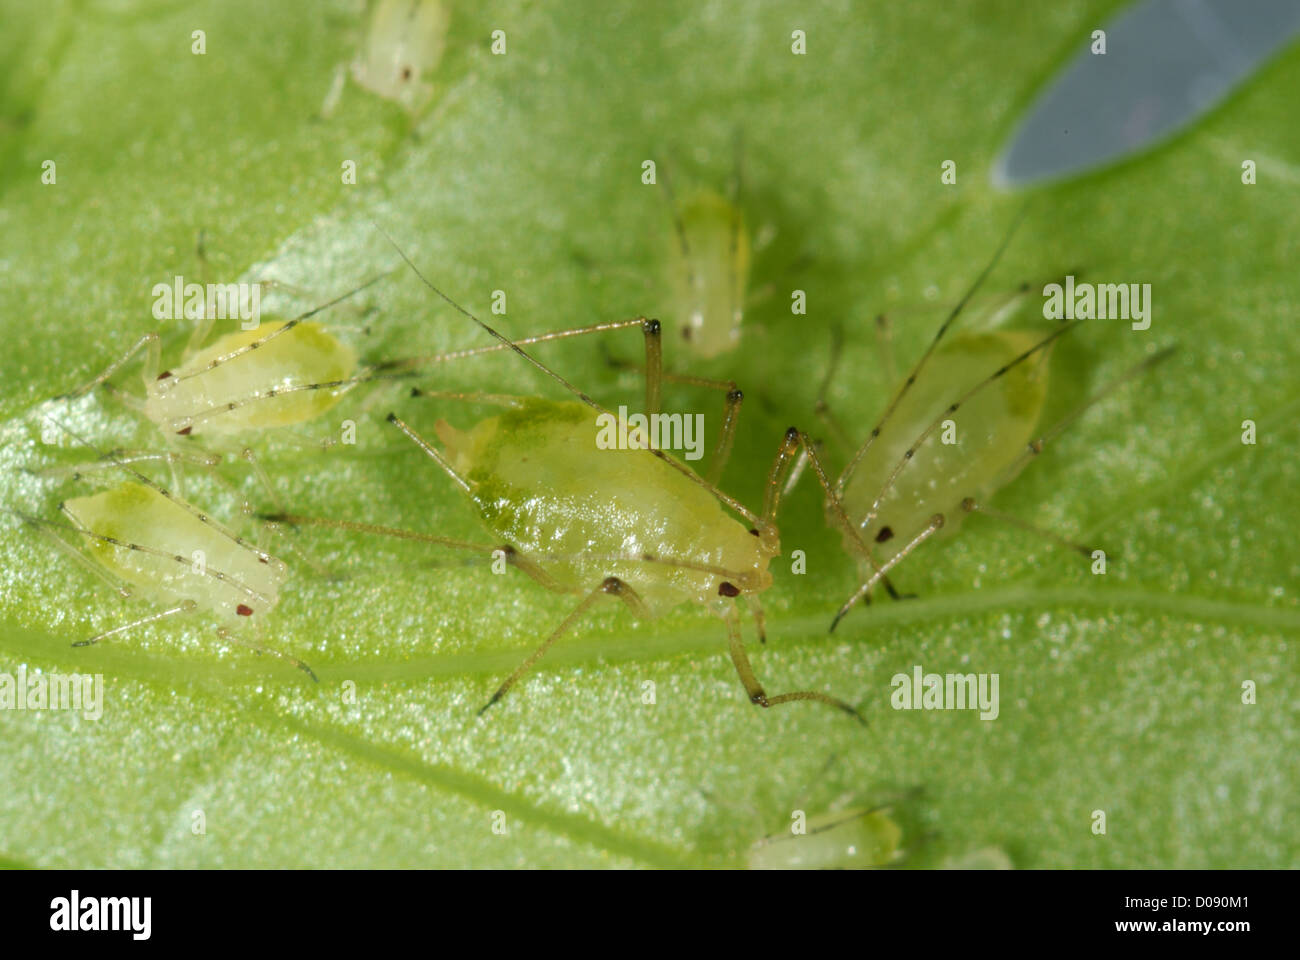 Mottled arum aphids, Aulacorthum circumflexum, on kitchen coriander plant Stock Photo